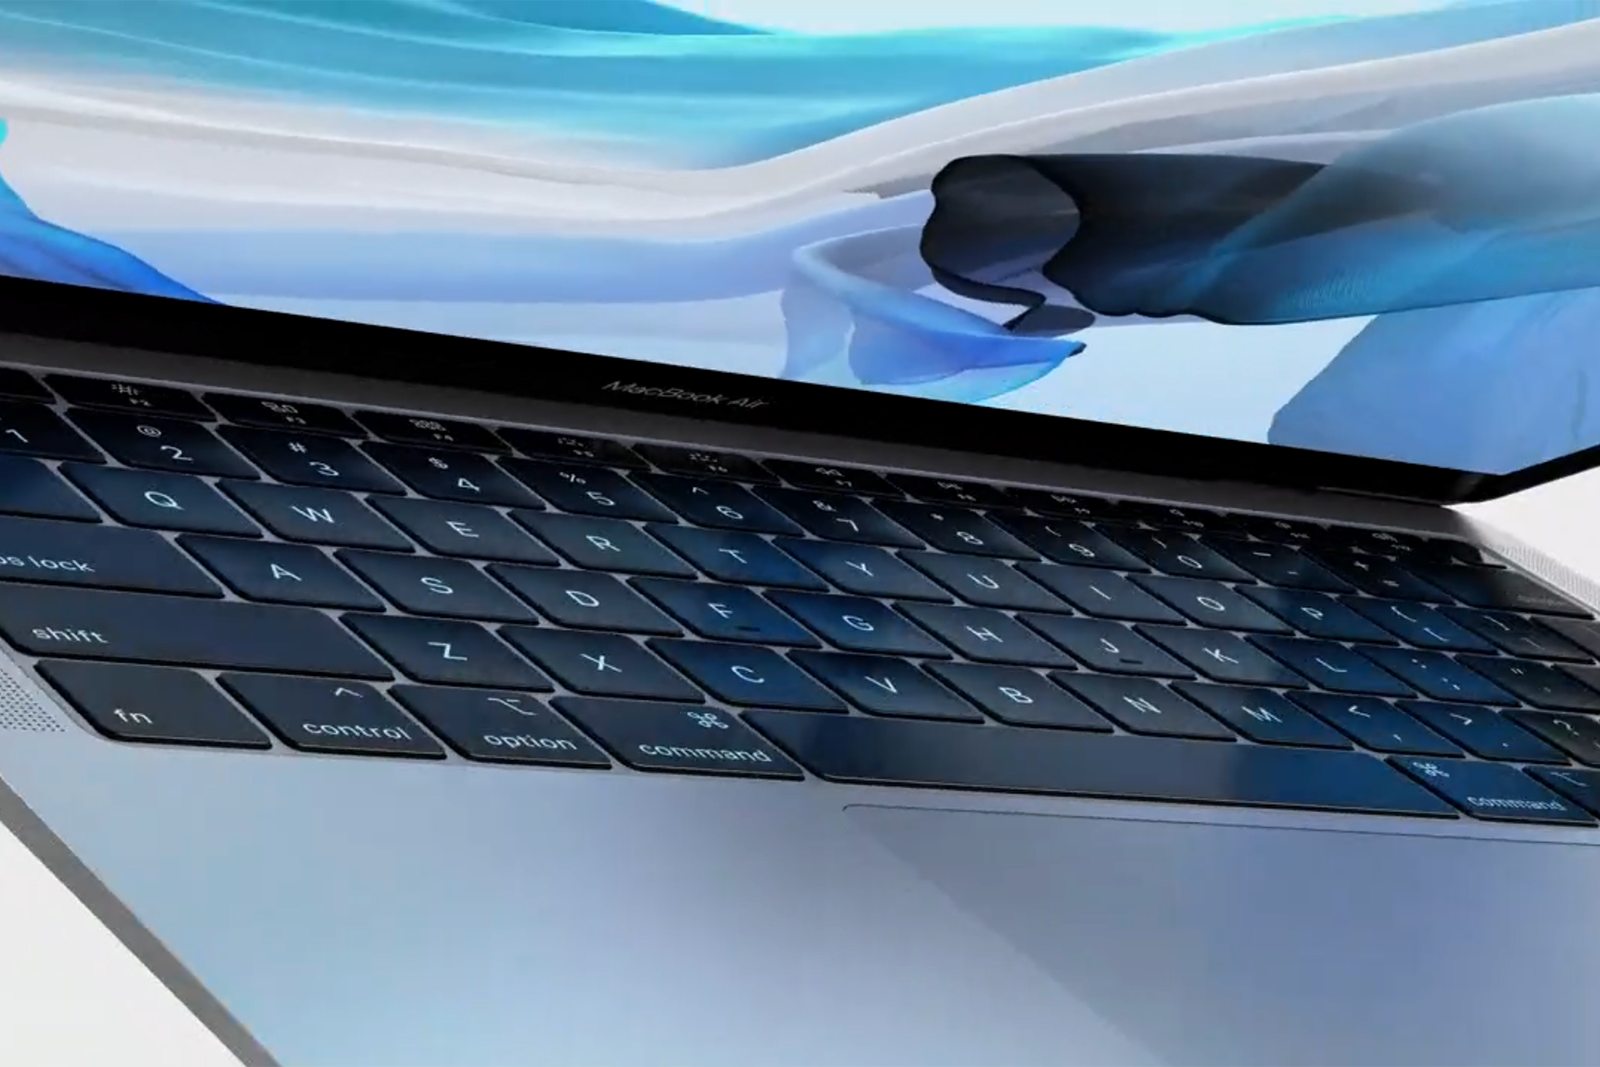 Apple Debuts A New Macbook Air At Long Last image 1